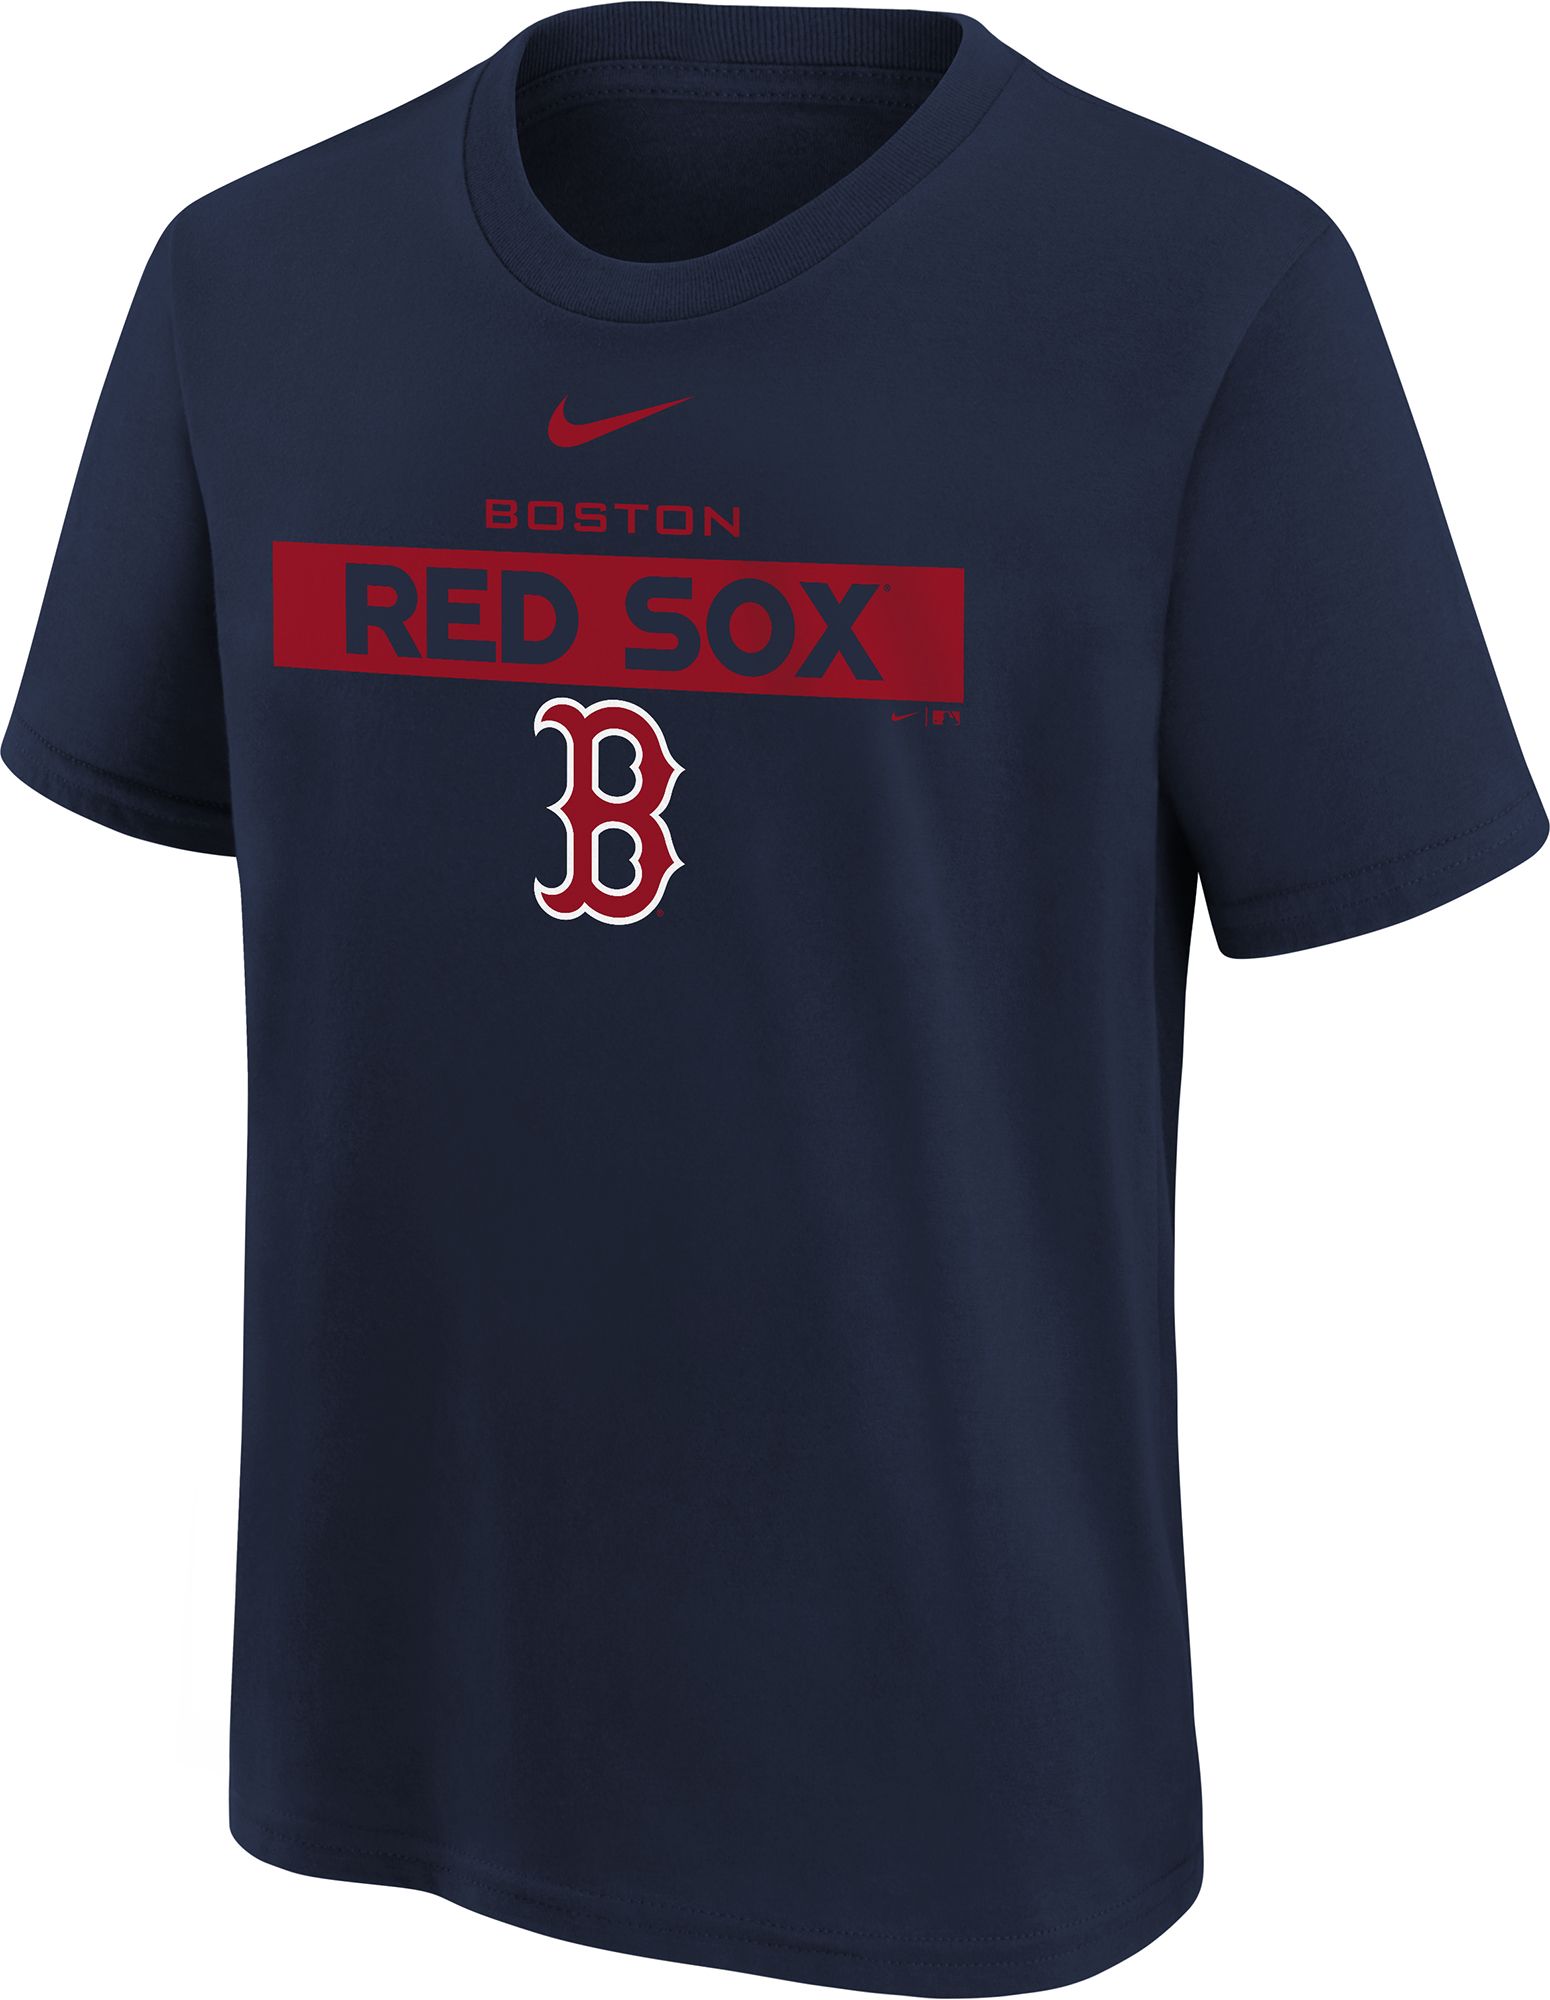 Men's Boston Red Sox New Era Yellow City Connect T-Shirt